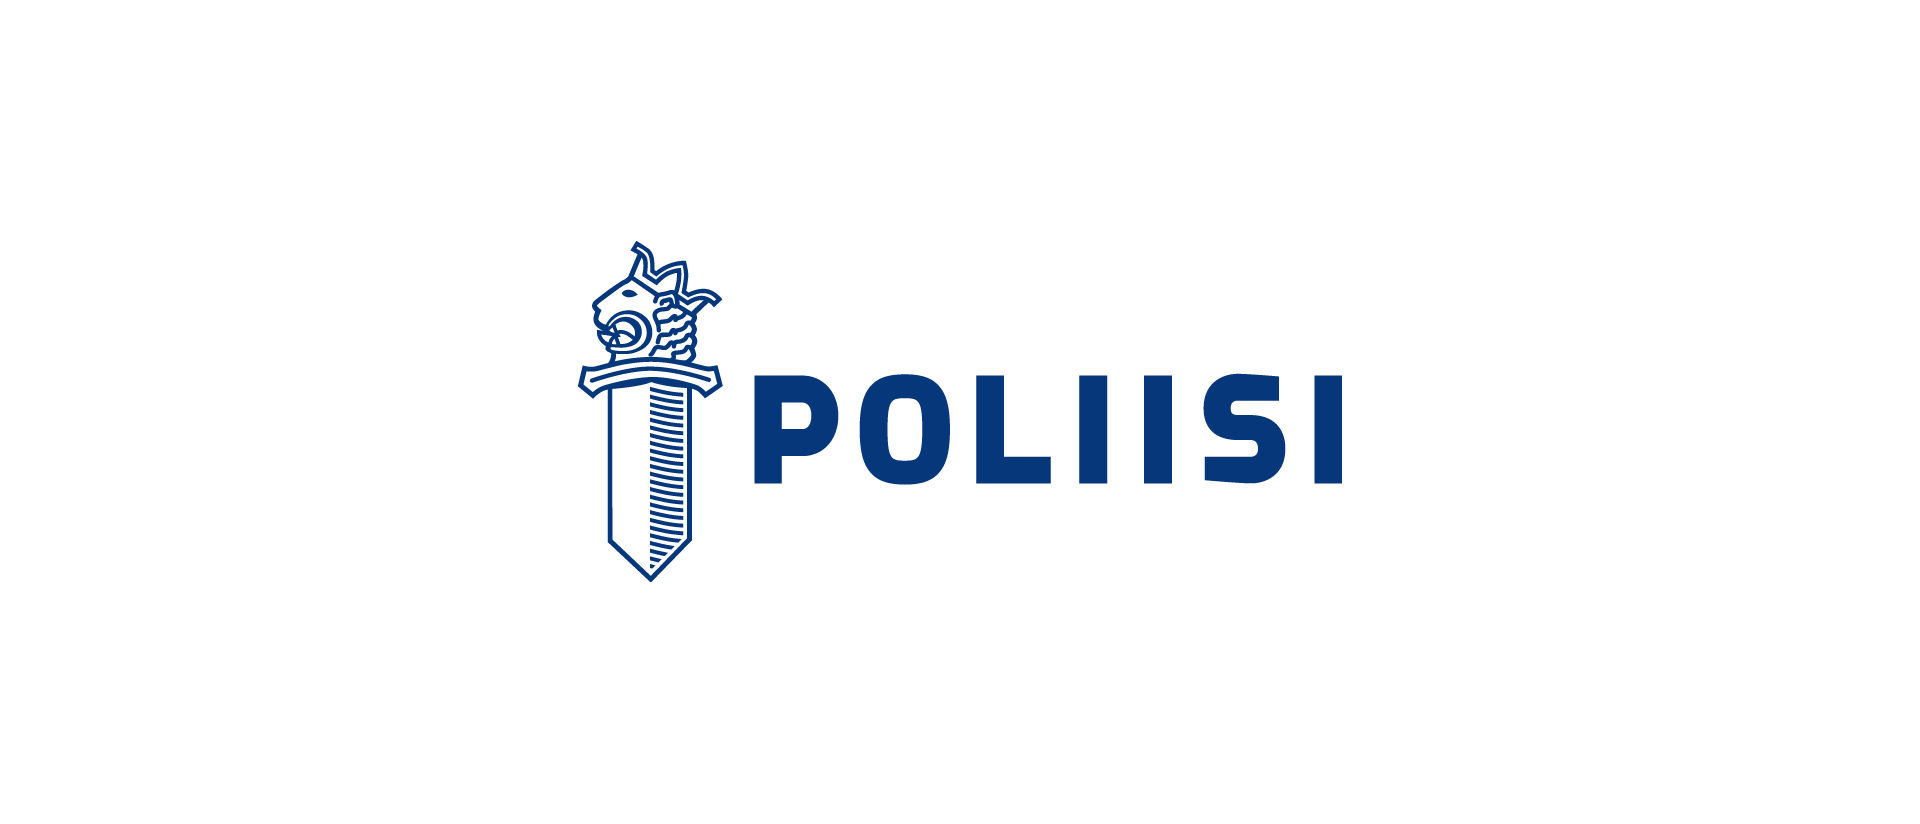 Poliisin logo